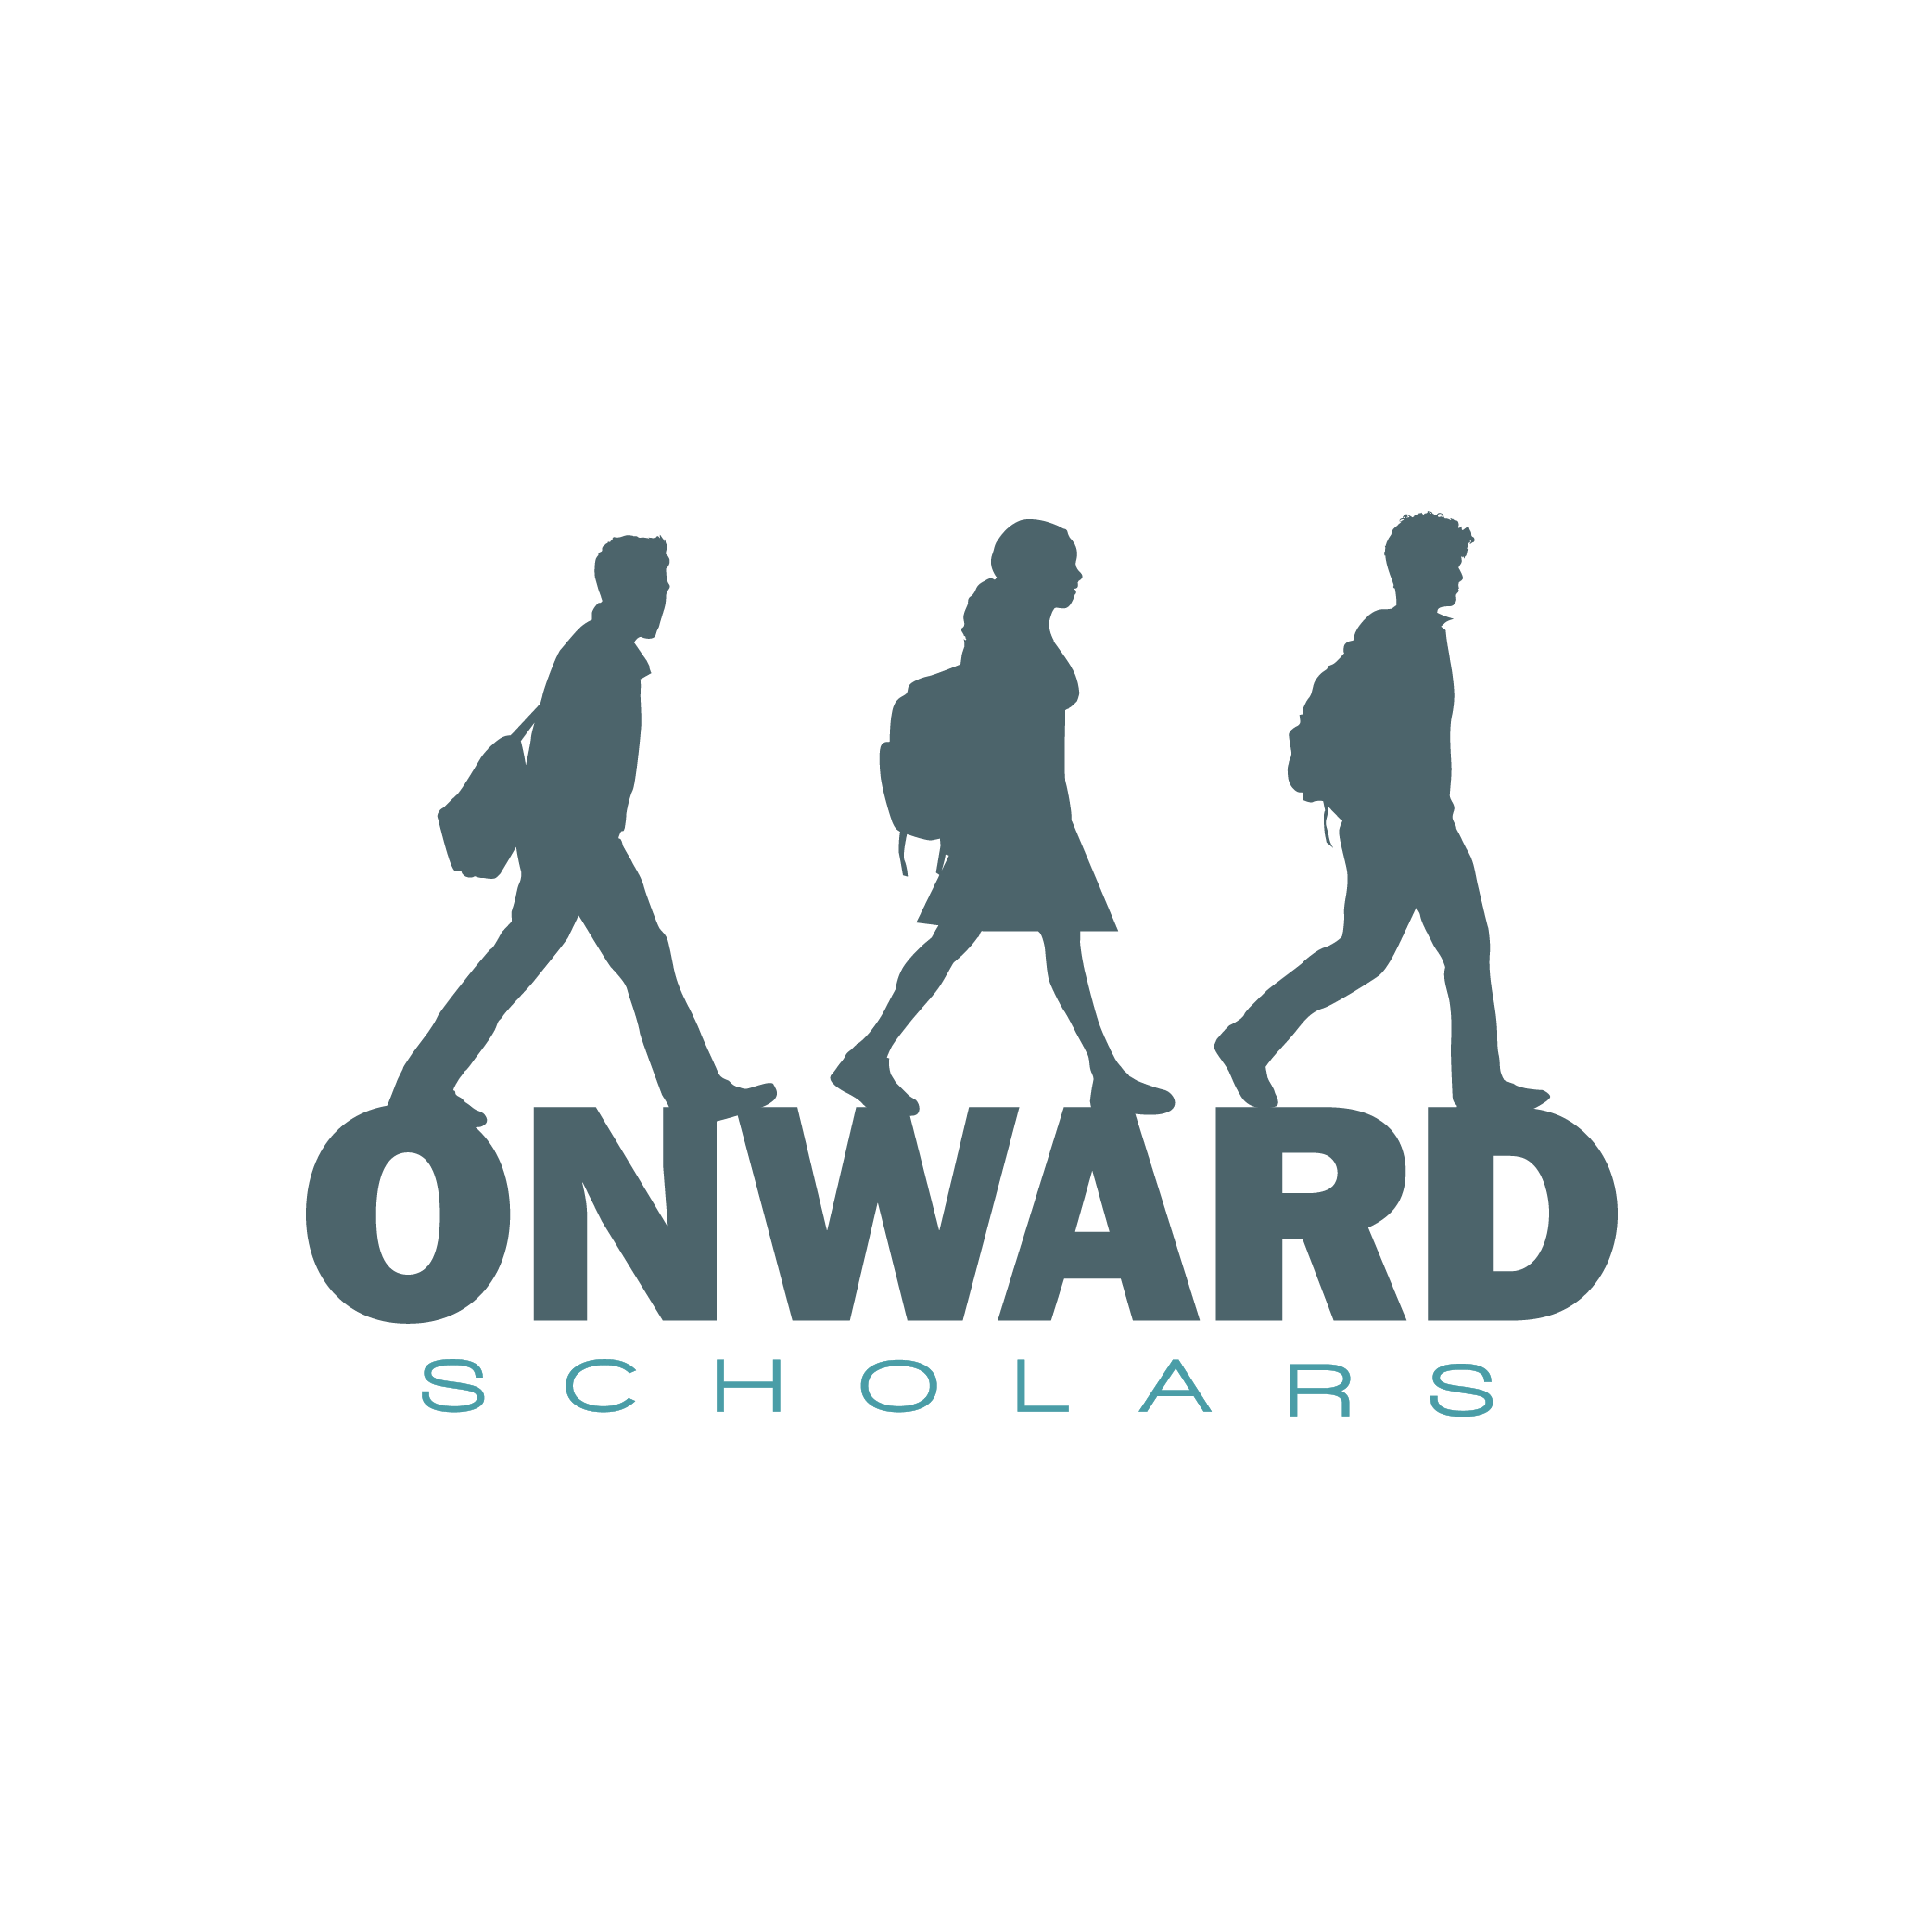 Onward Scholars logo